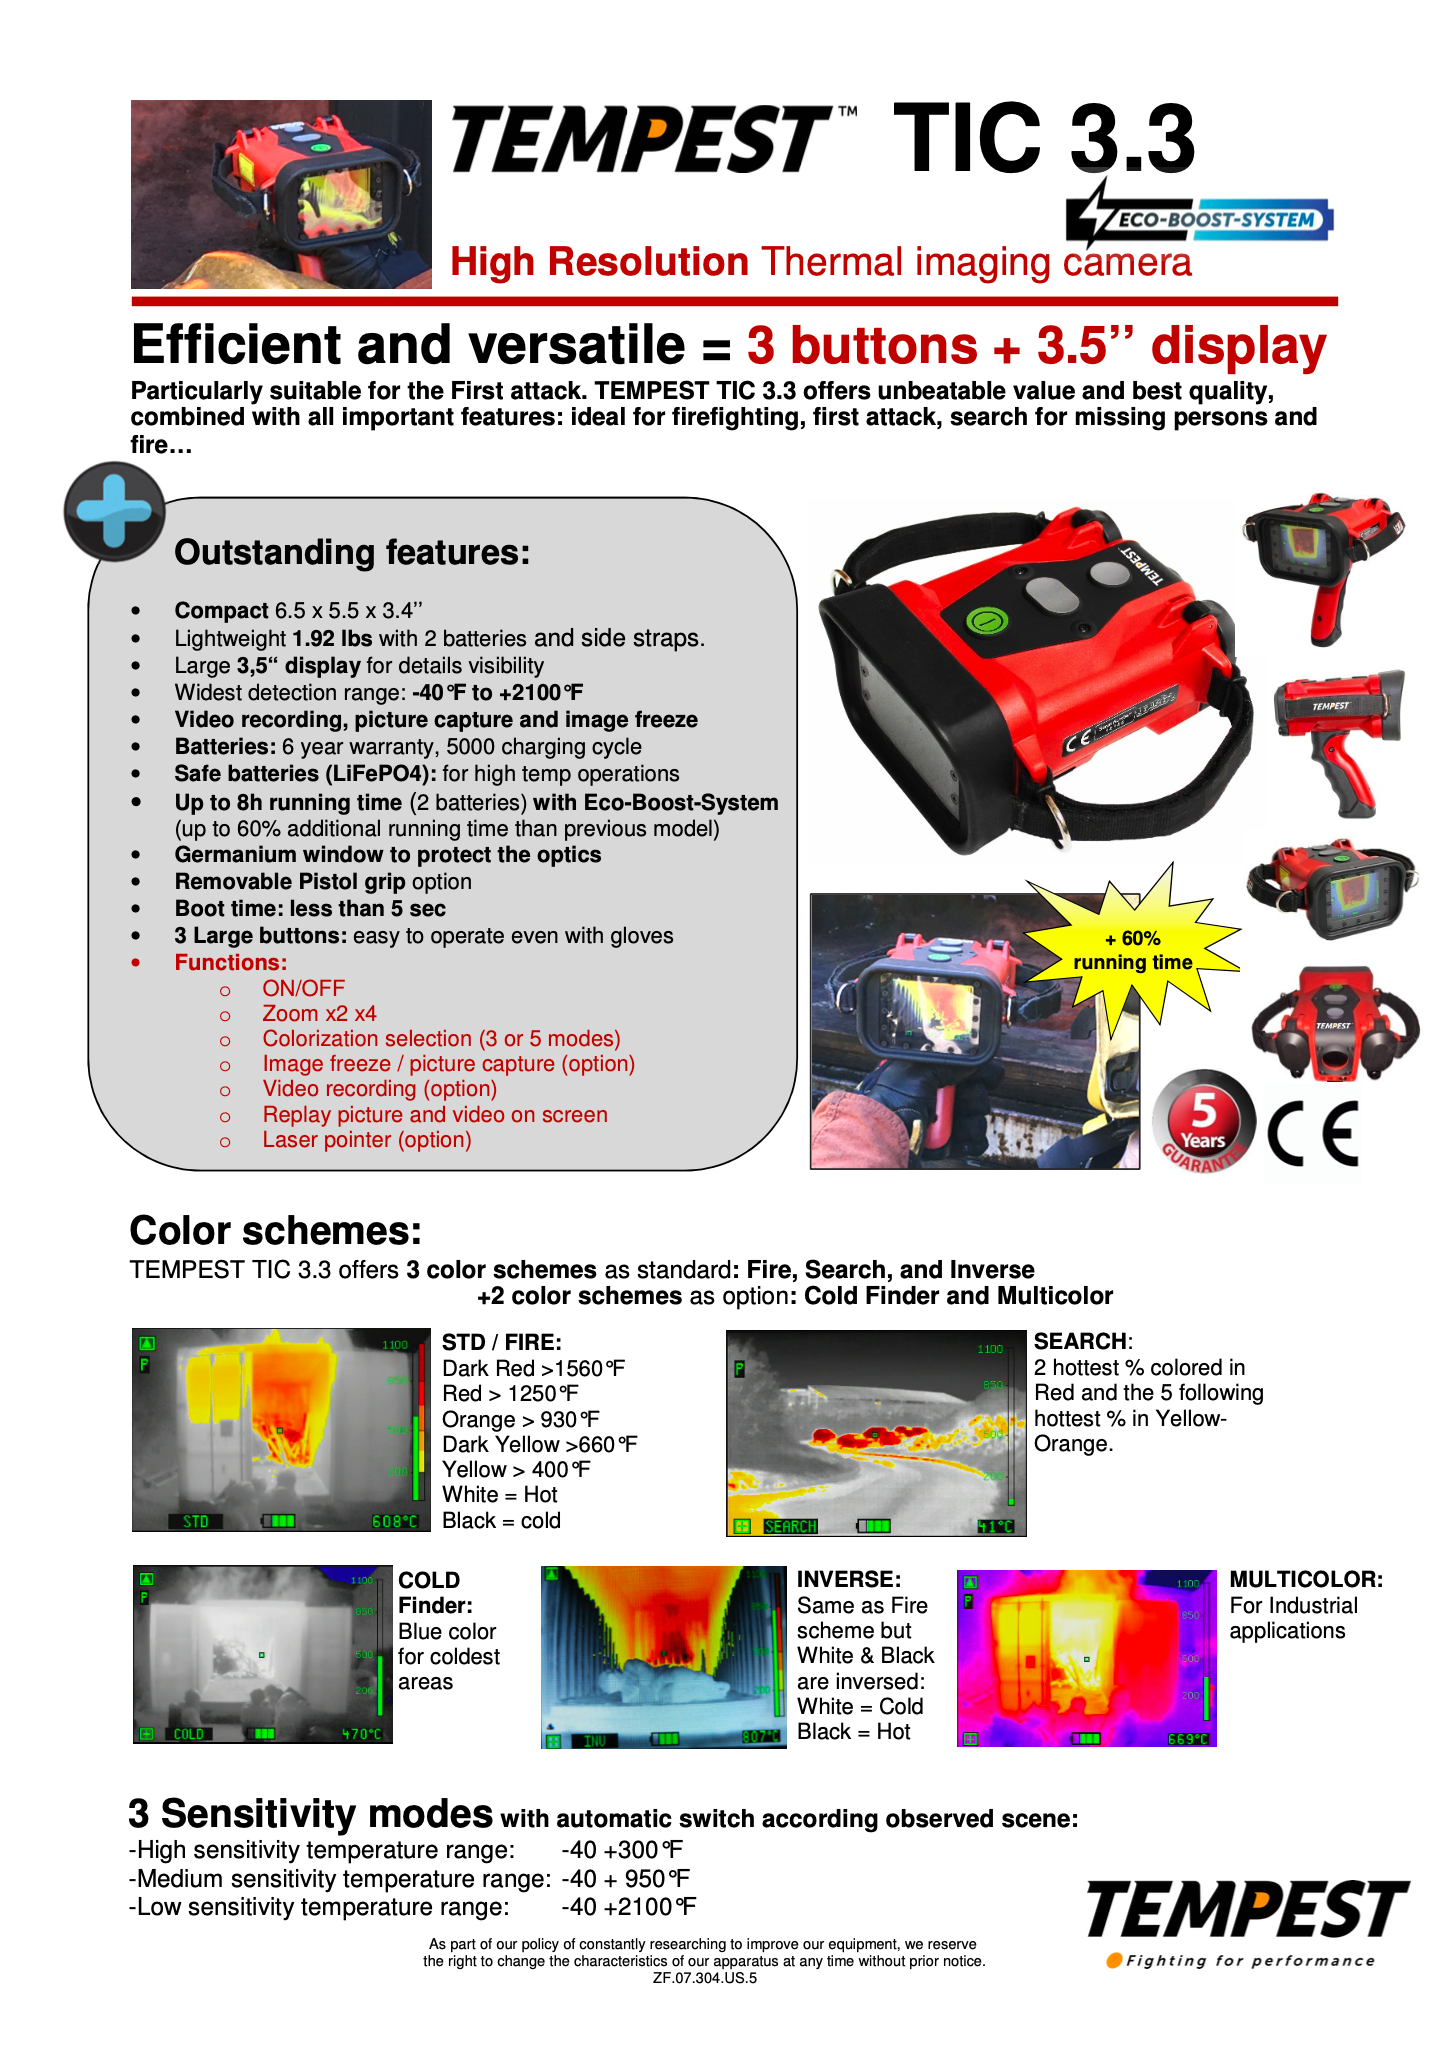 Thermal Imaging Cameras Tempest Tic 3.3